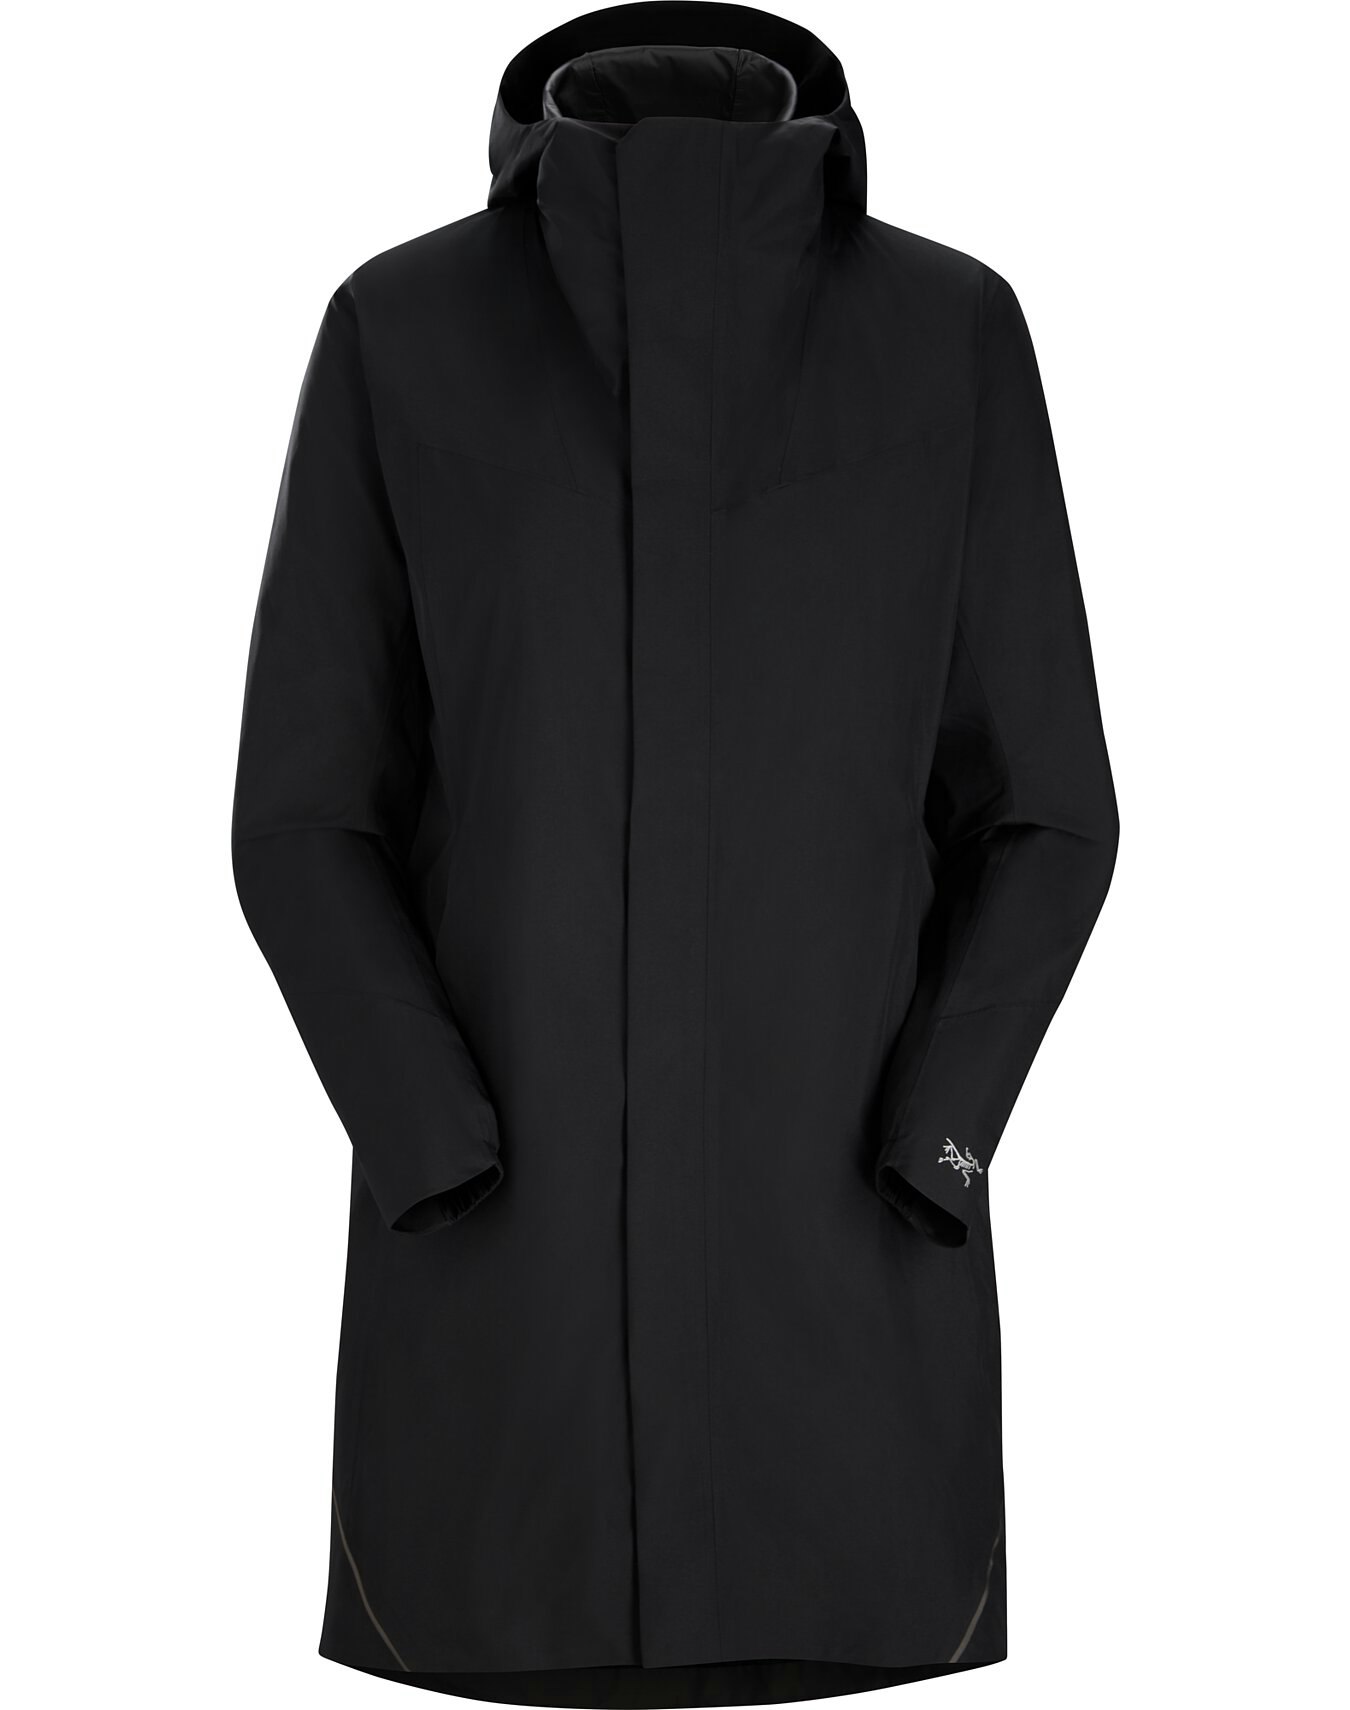 Solano Coat Black